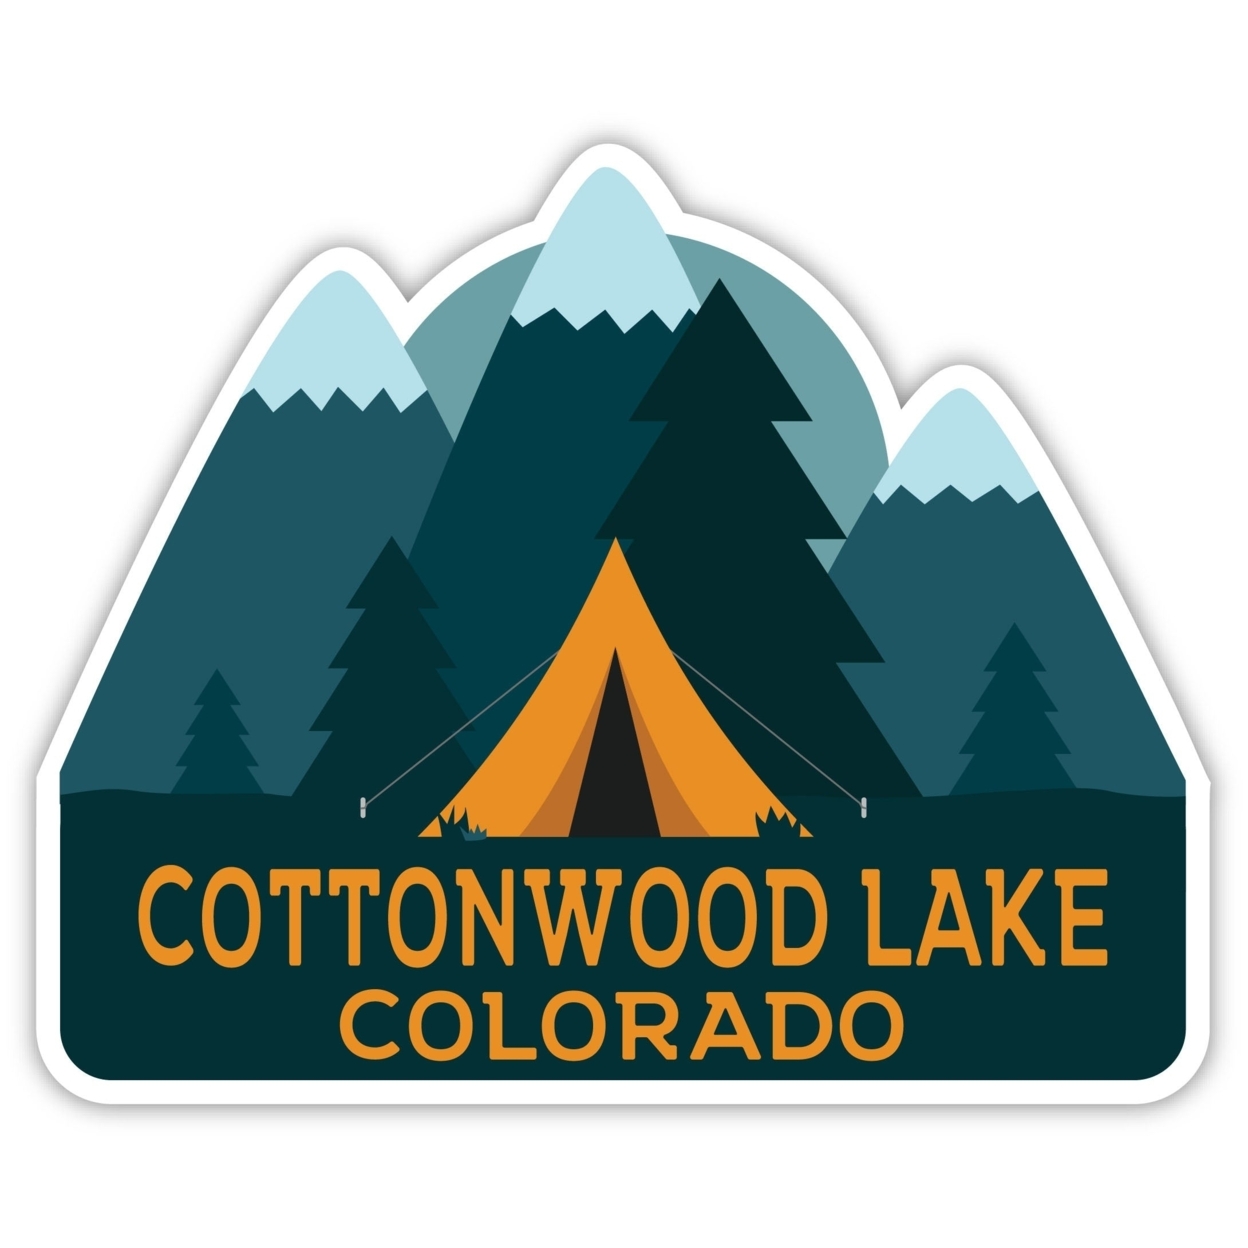 Cottonwood Lake Colorado Souvenir Decorative Stickers (Choose Theme And Size) - 4-Pack, 2-Inch, Bear